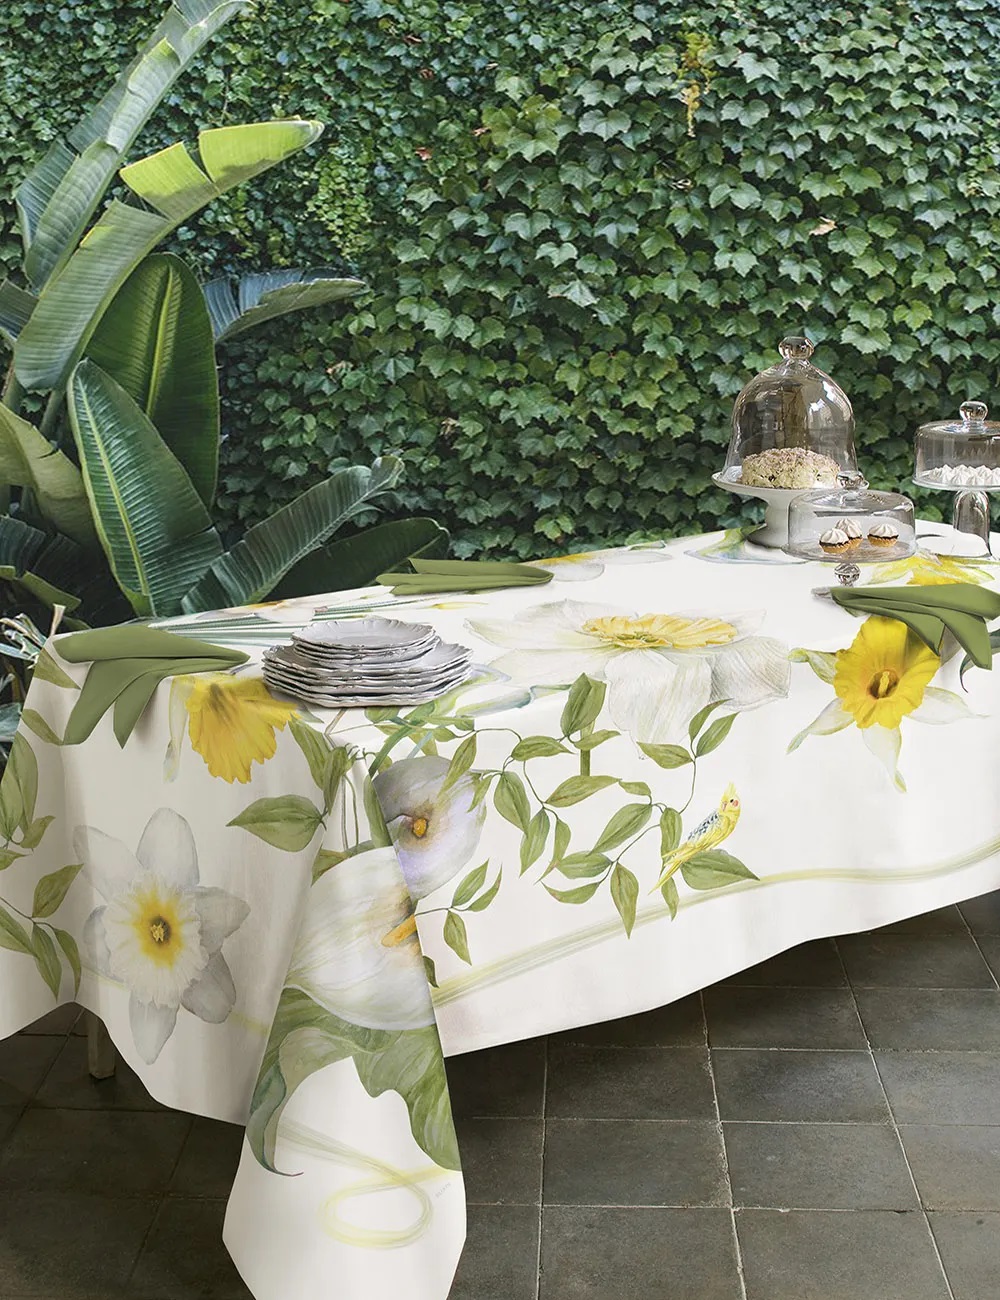 Tovaglia da tavola rettangolare 8 posti bianca stampa fiori gialli - 8  seater rectangular white tablecloth flowers printed